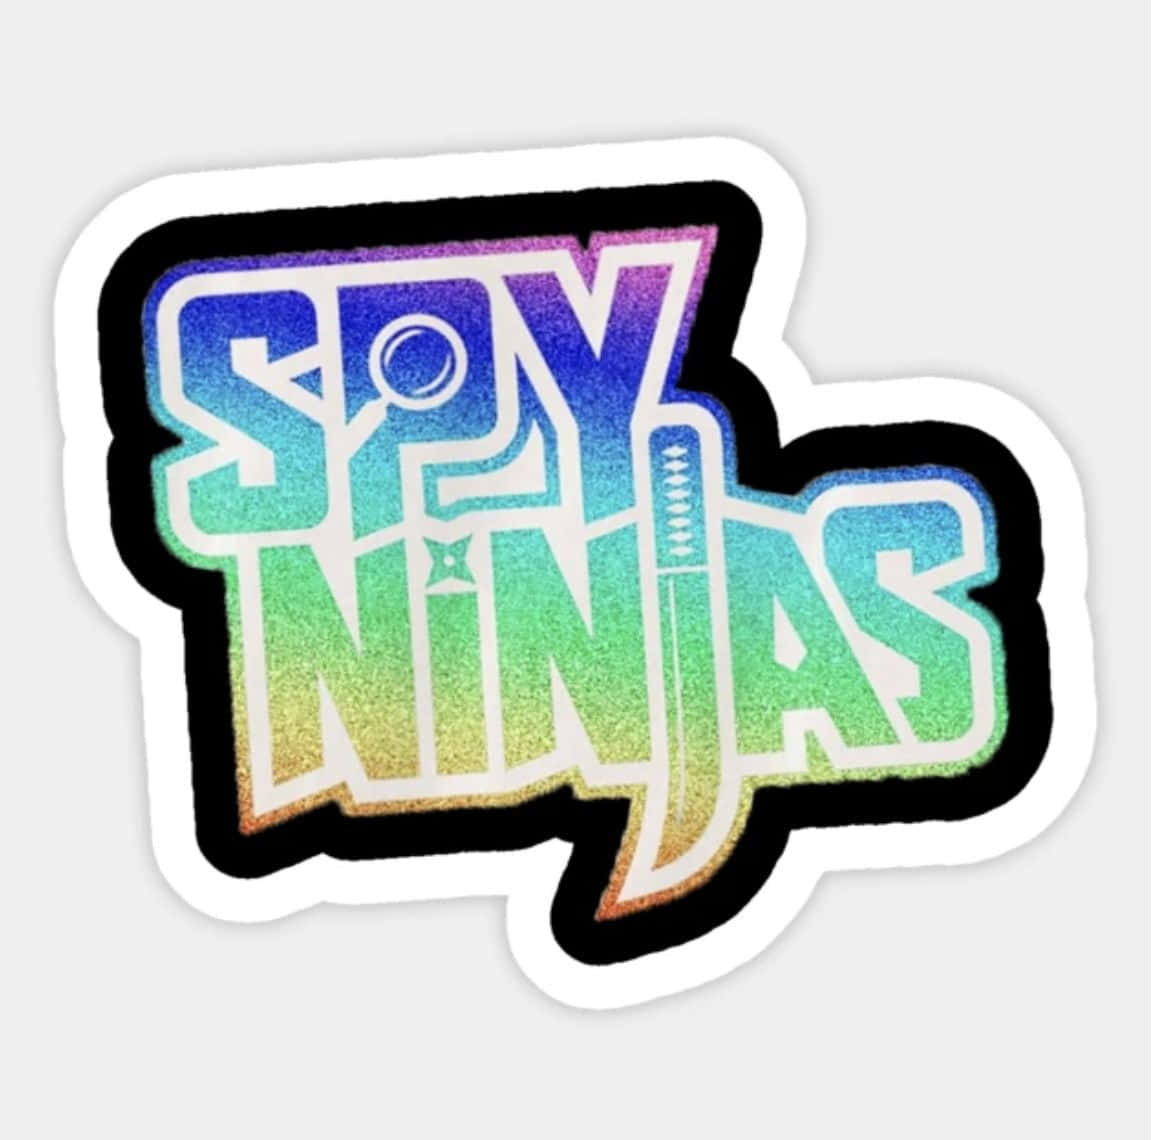 Det Spy Ninjas glitrende stickerbillede